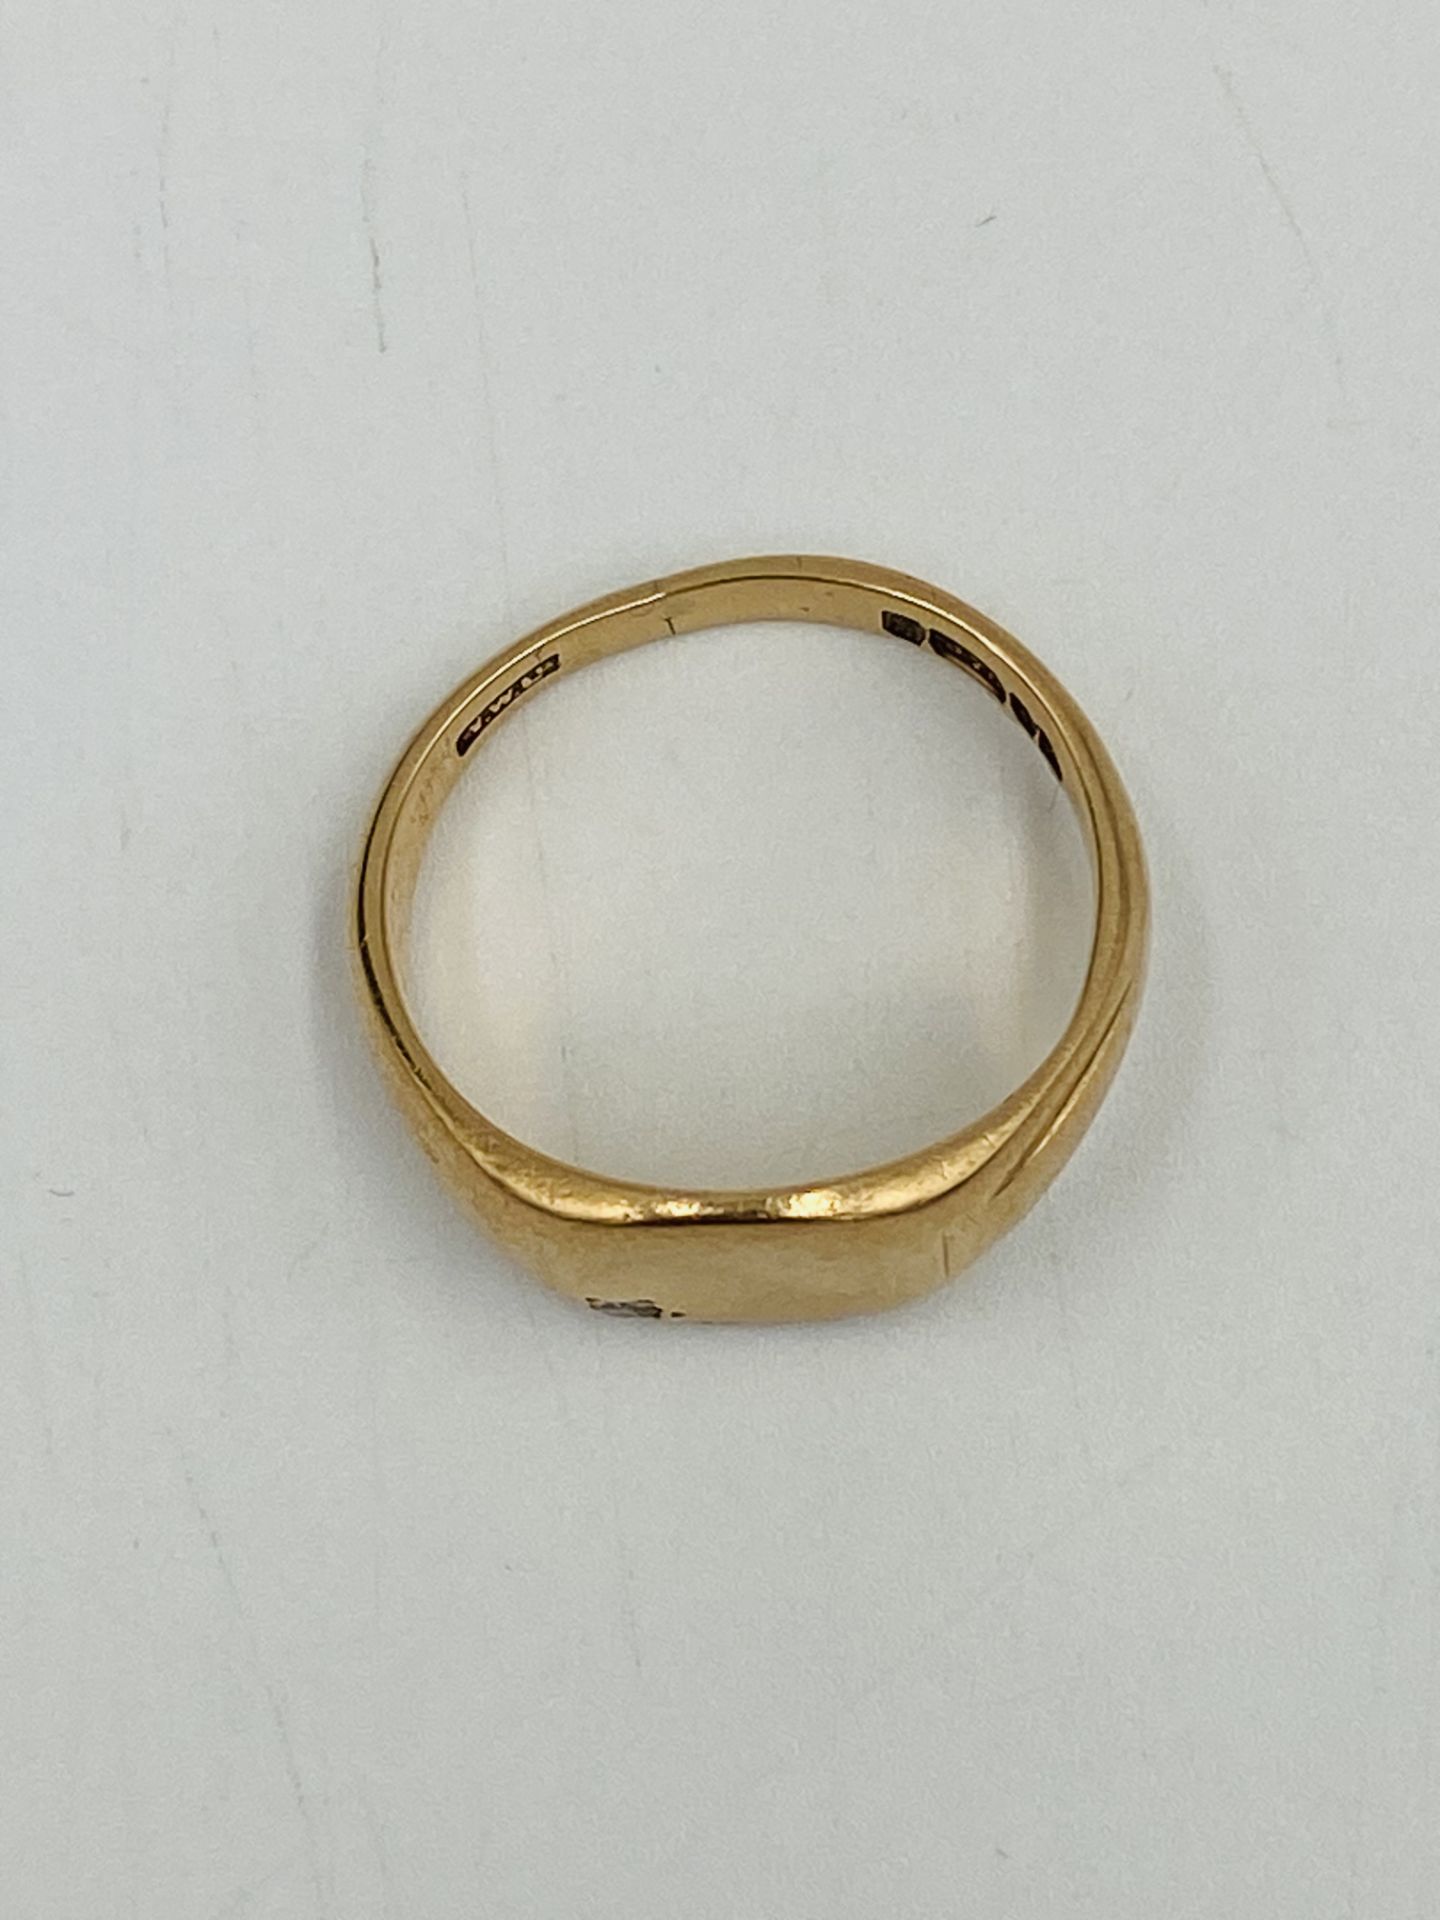 9ct gold signet ring - Image 4 of 5